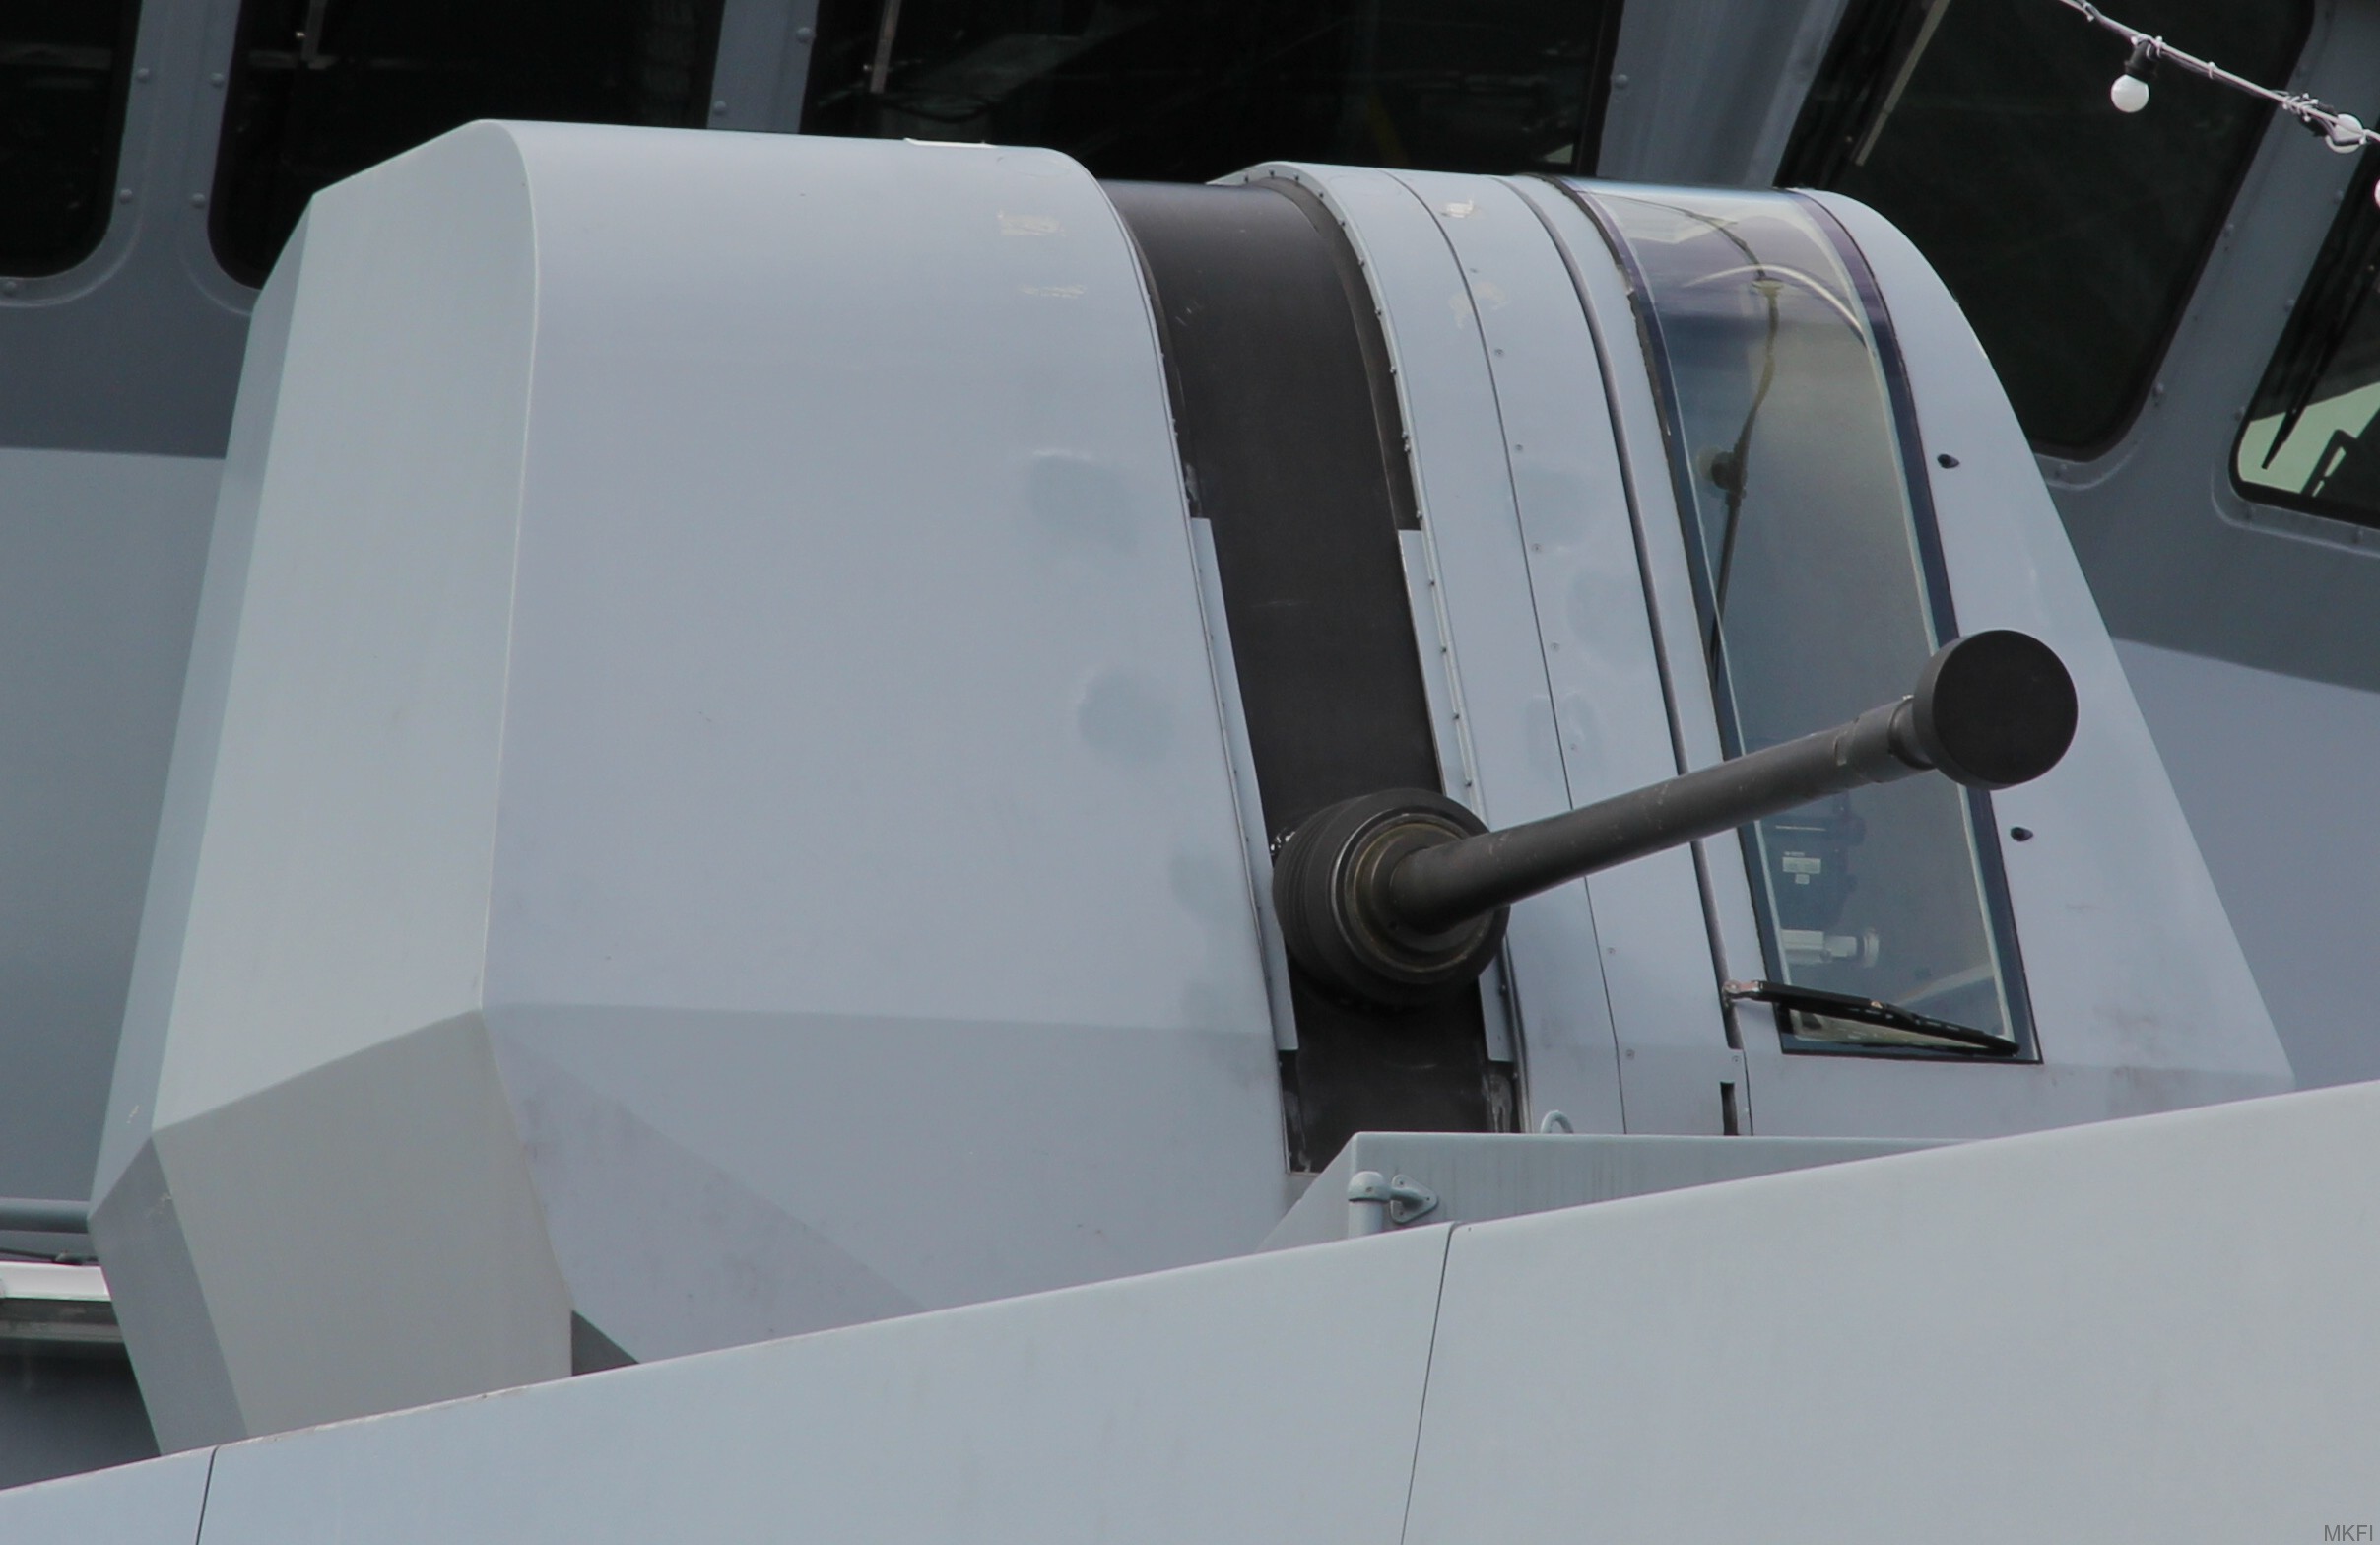 bofors 40/l70 aa naval gun 40mm 70-caliber automatic bae systems navy ship 10